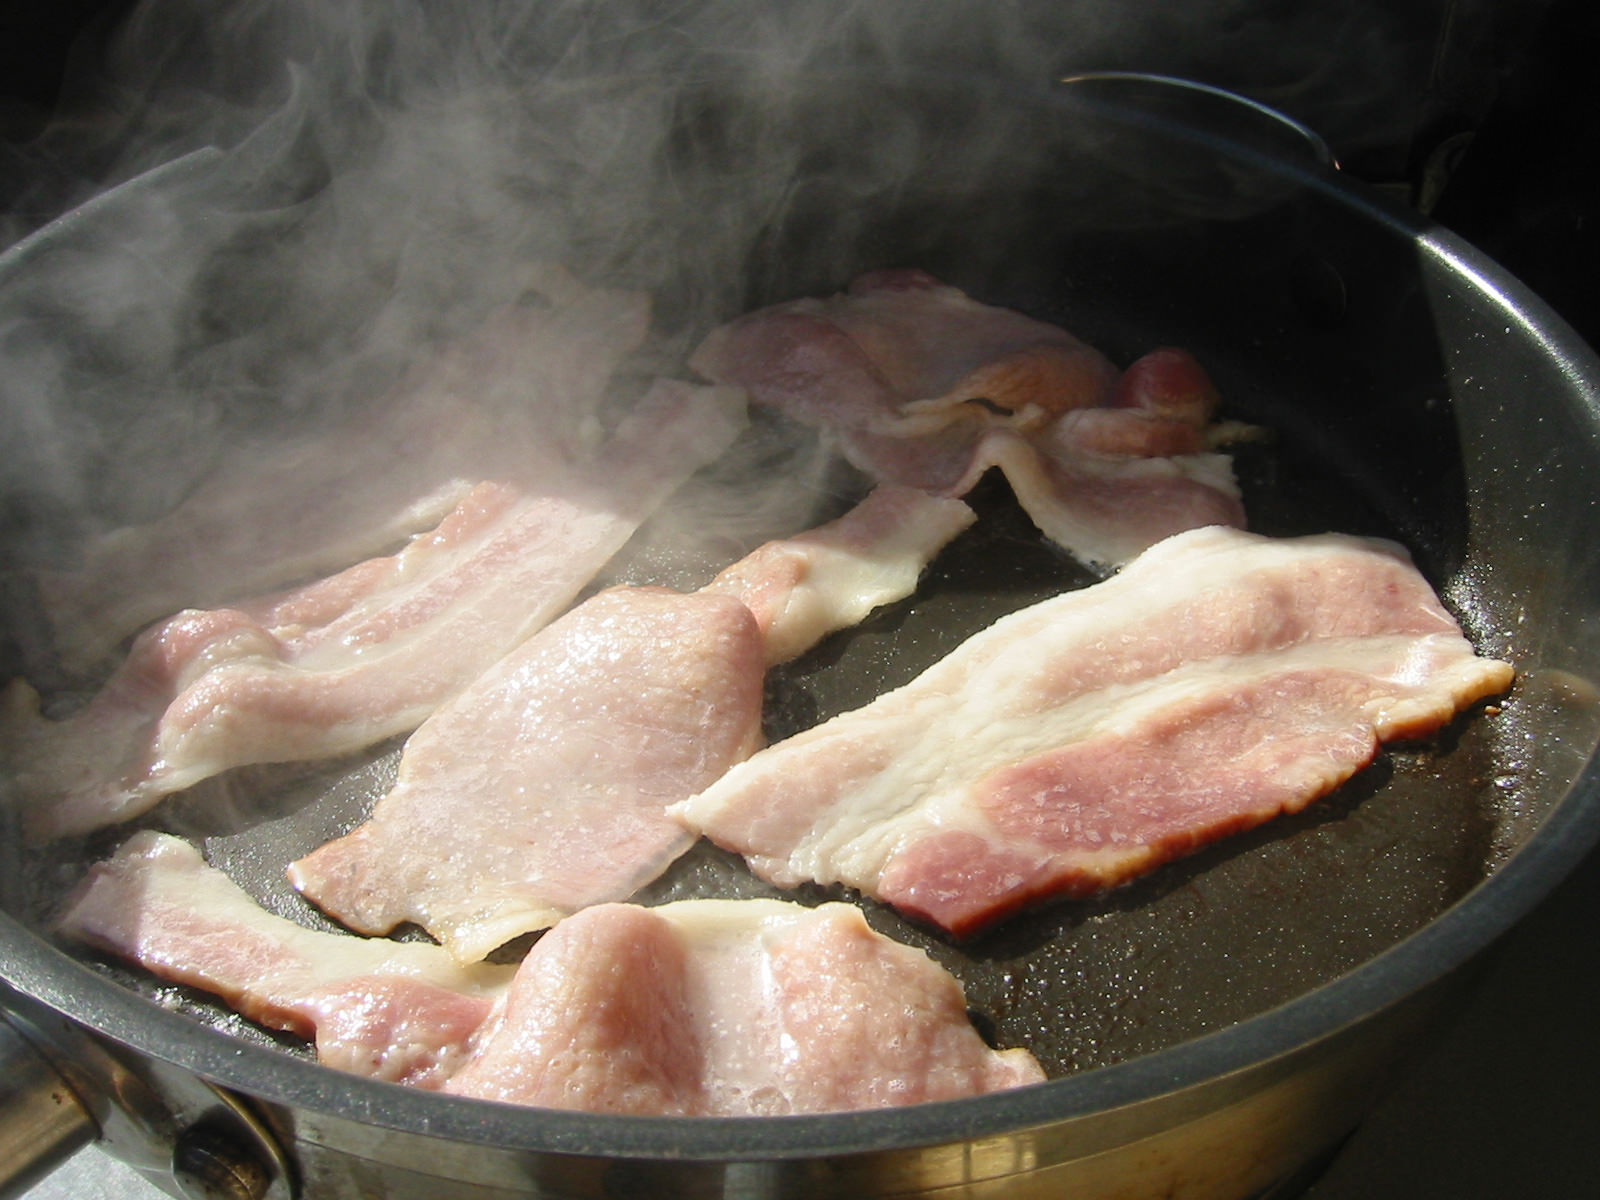 Frying bacon (with smoke)